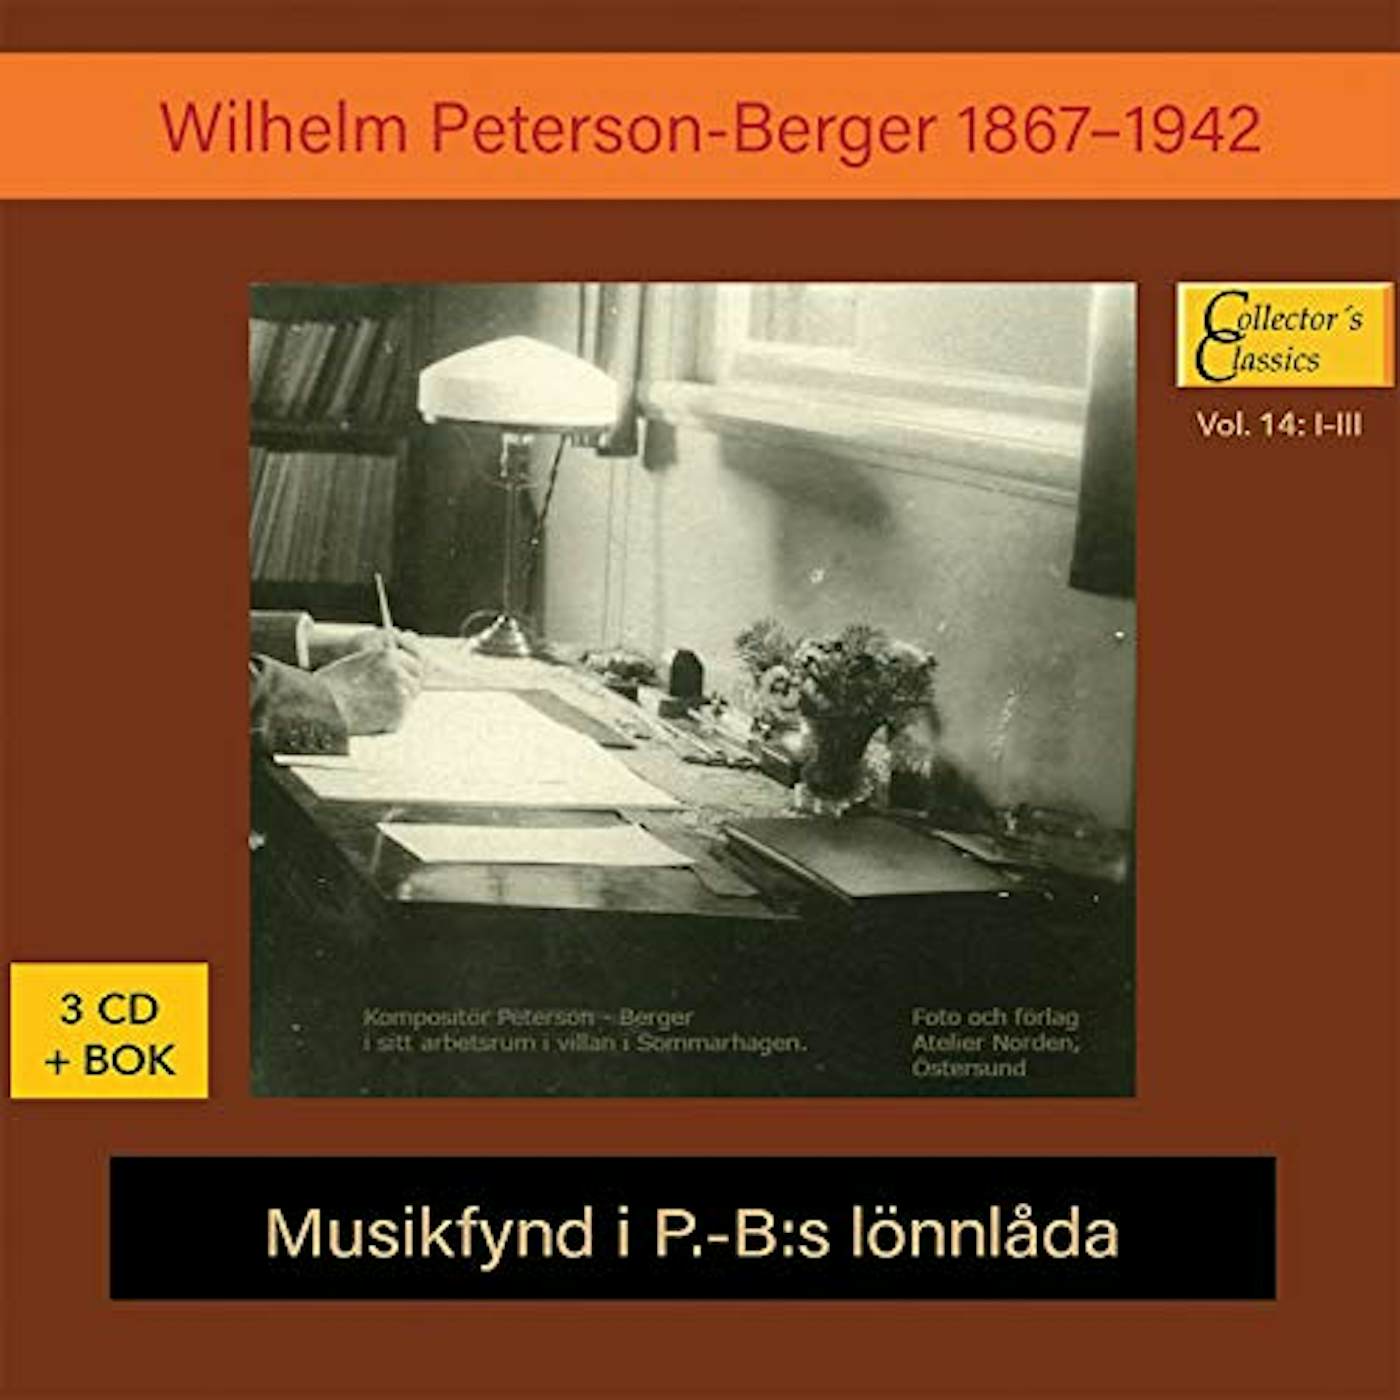 Peterson-Berger LONNLADA CD